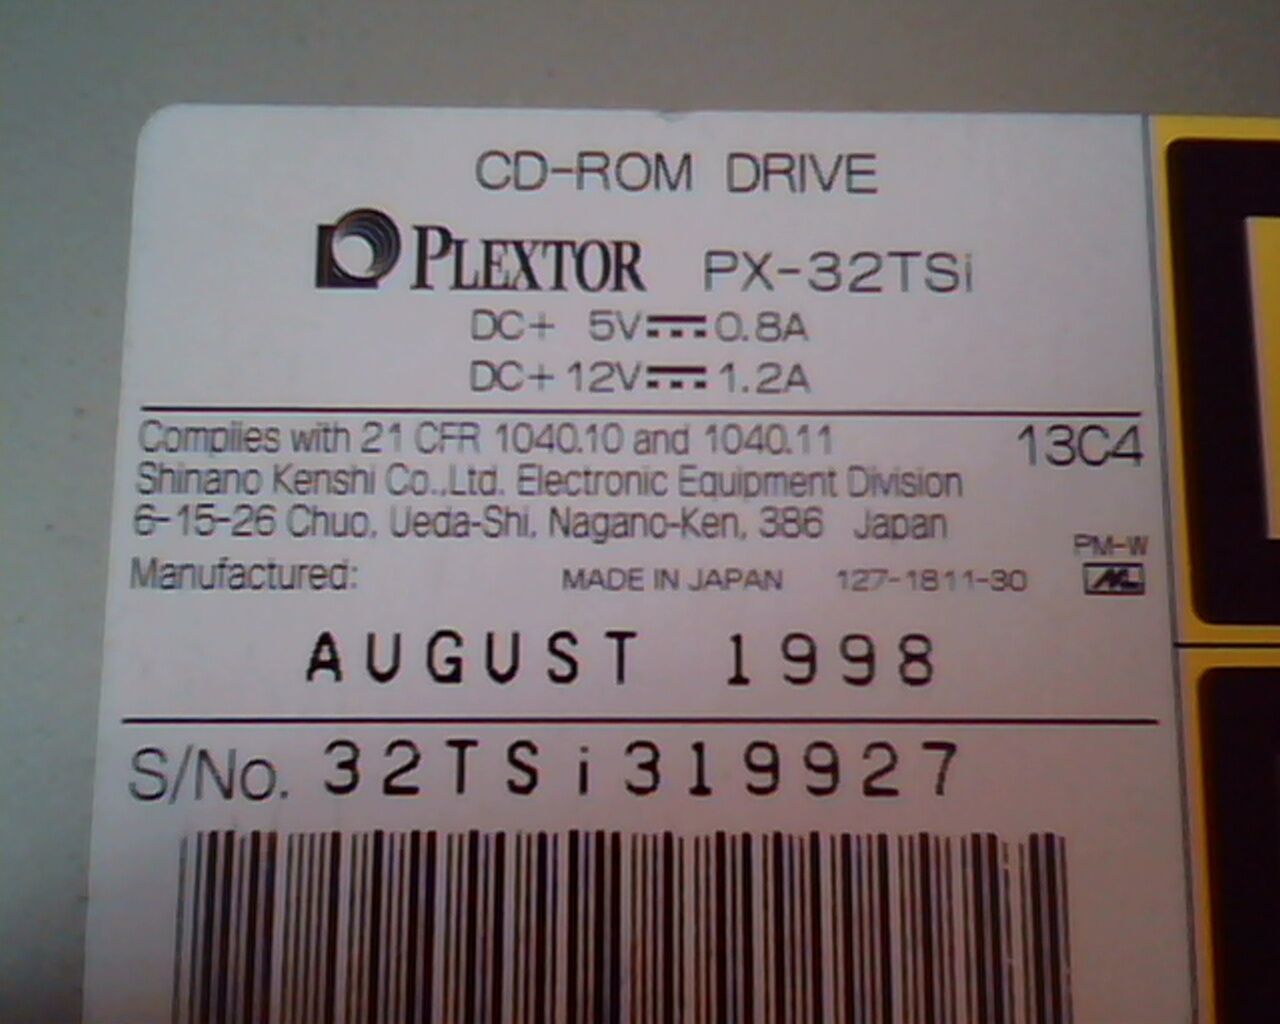 Plextor PX-32TSi CD-ROM Drive 13C4 0303 August 1998 E132064 UltraPlex 